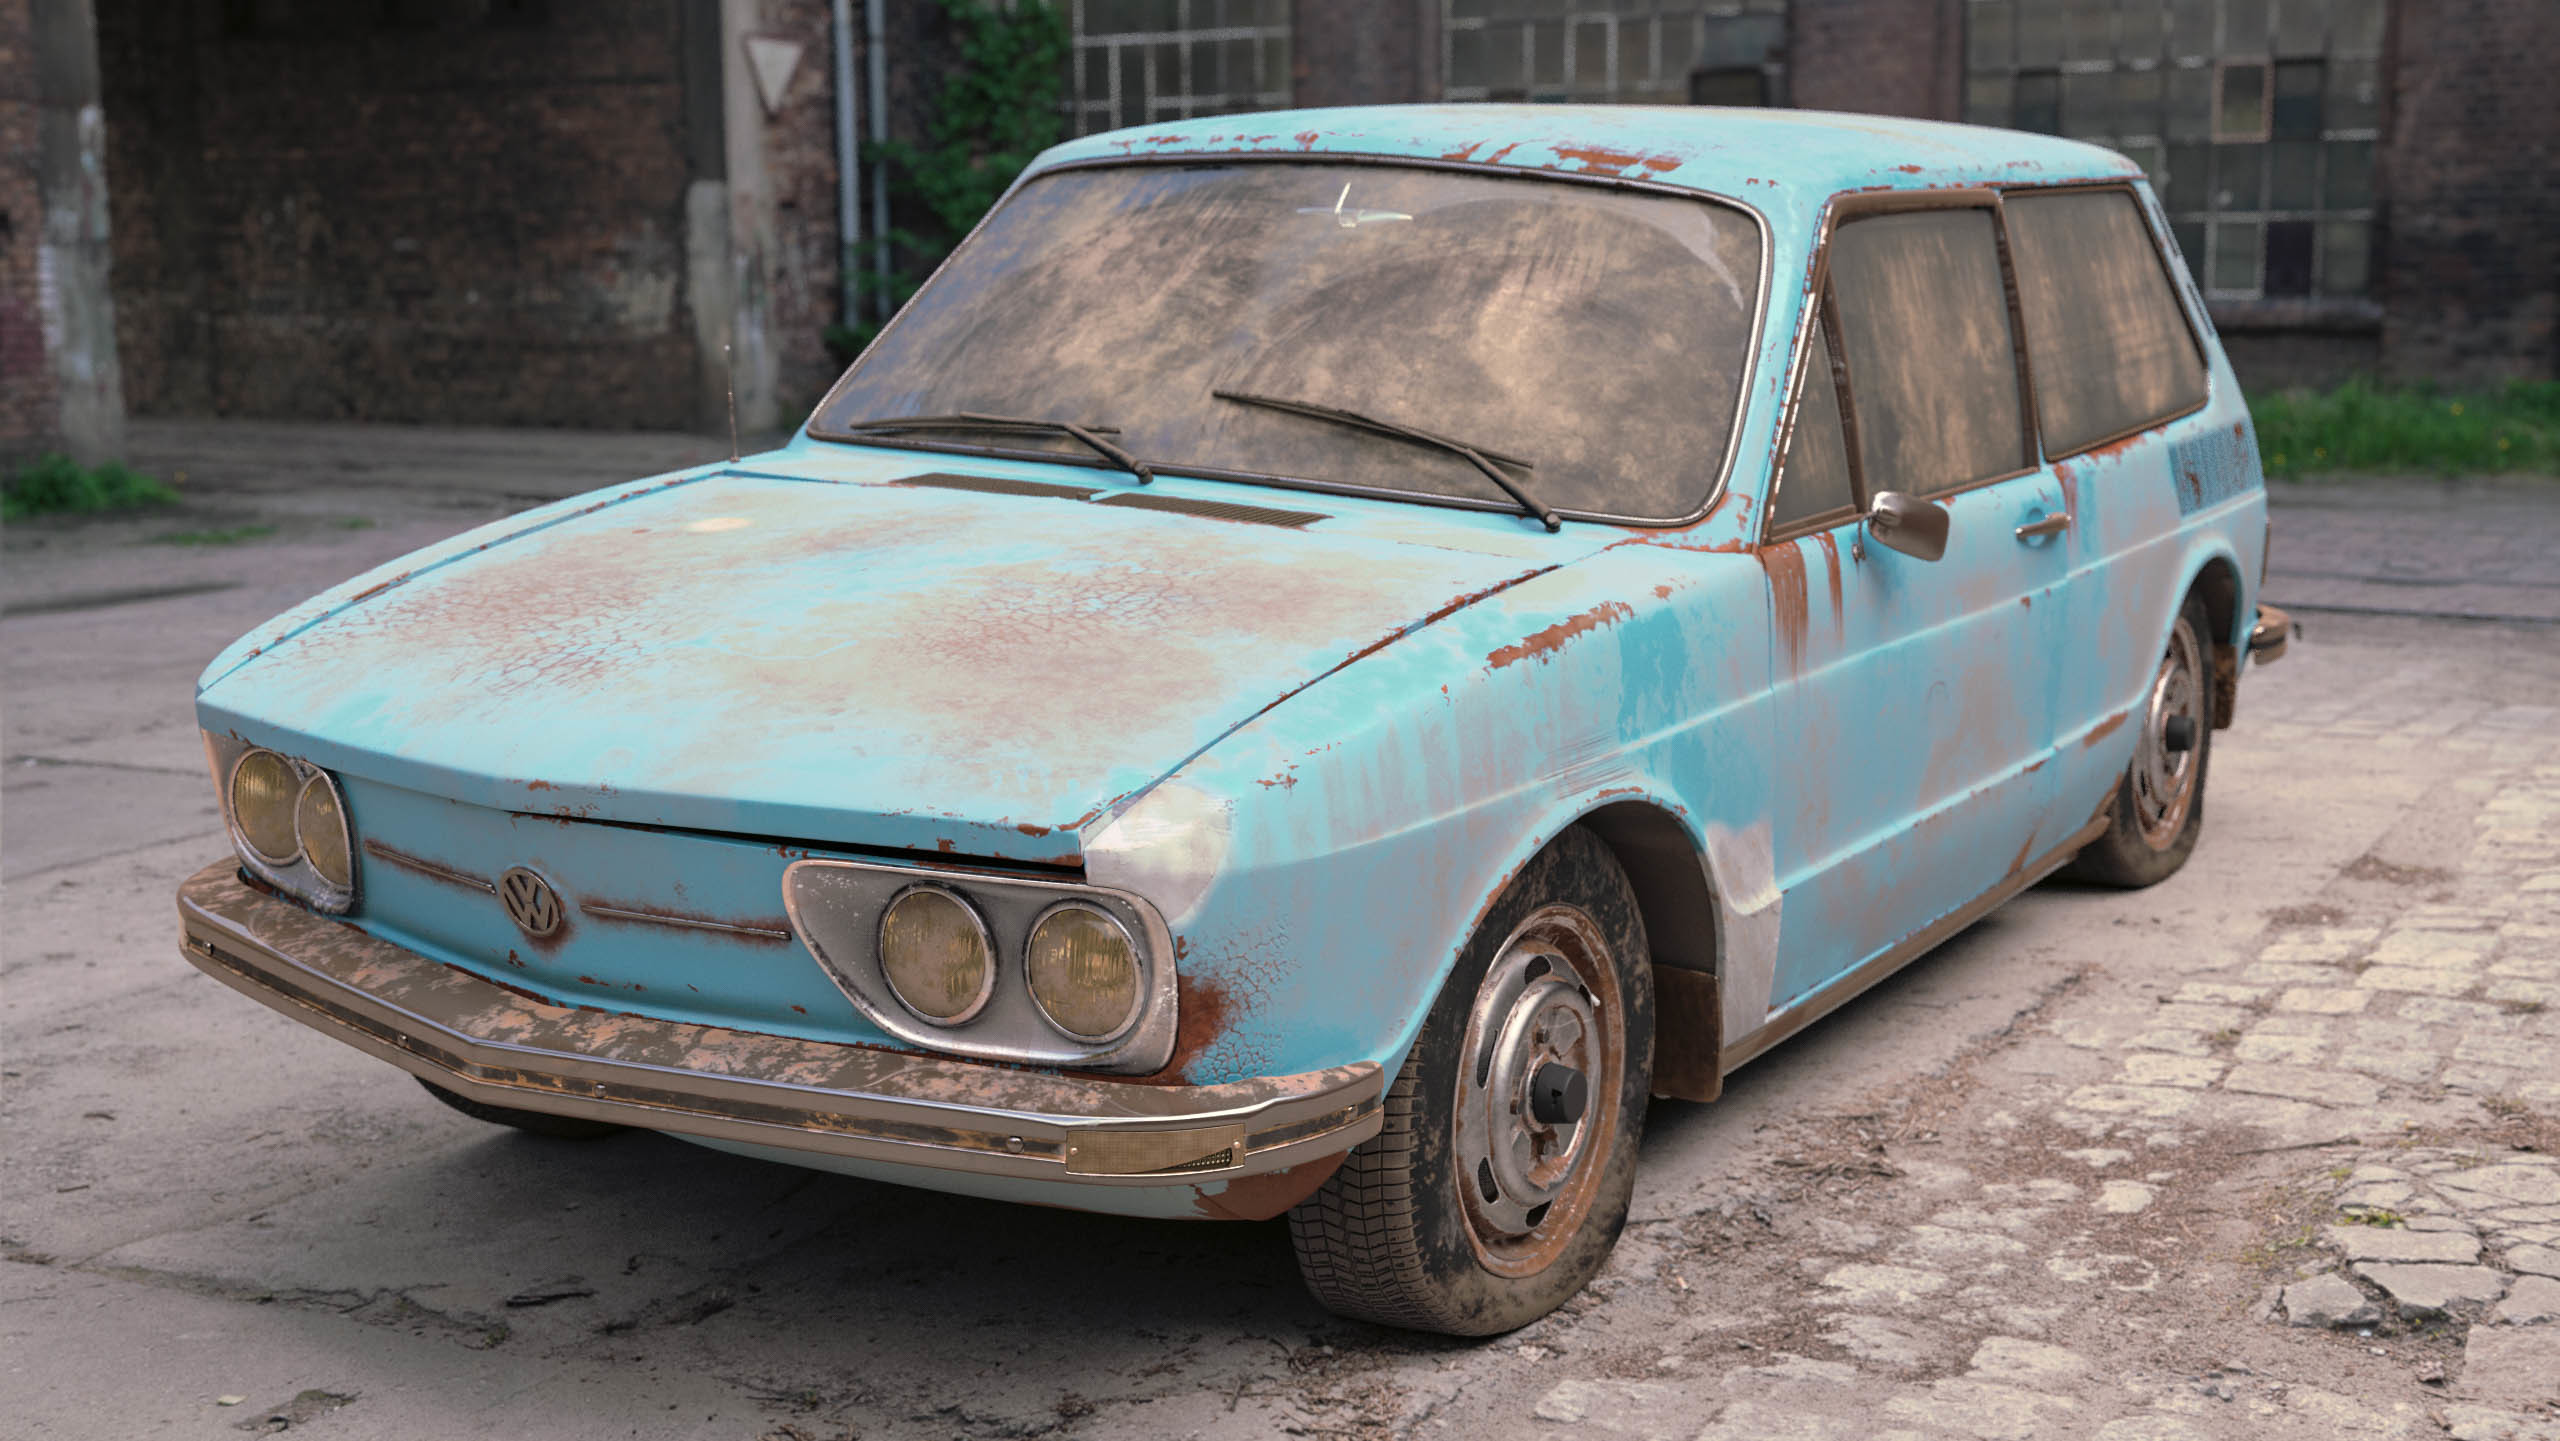 d maya redshift substance painter und fusion D VW Brasilia Abandoned Igor Colaiacovo